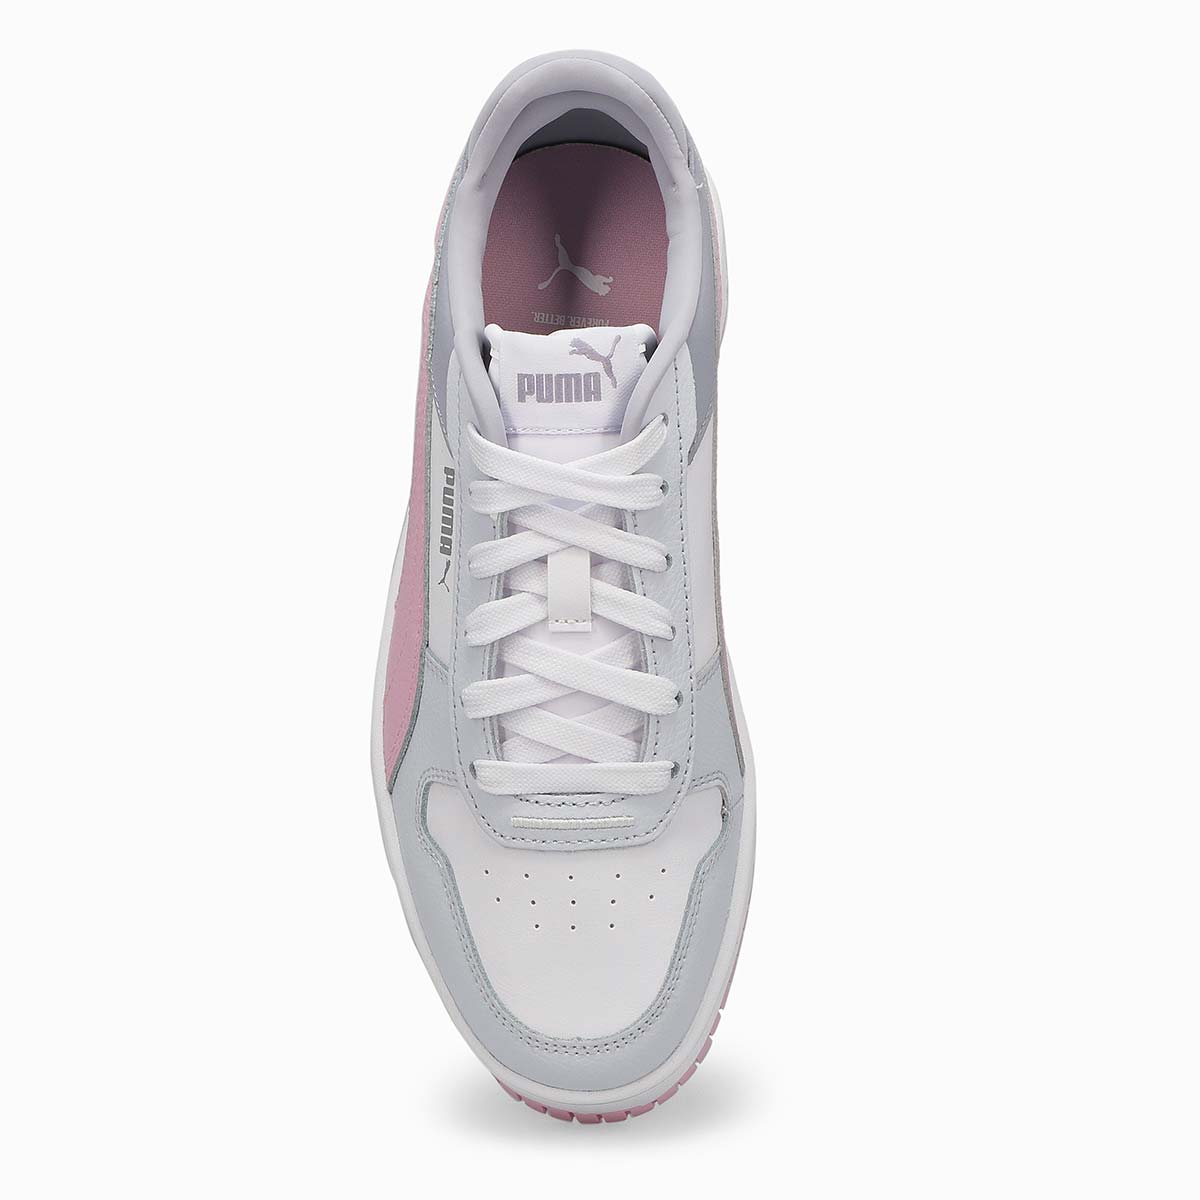 Women's Carina Street Sneaker - White/Grape/ Silver